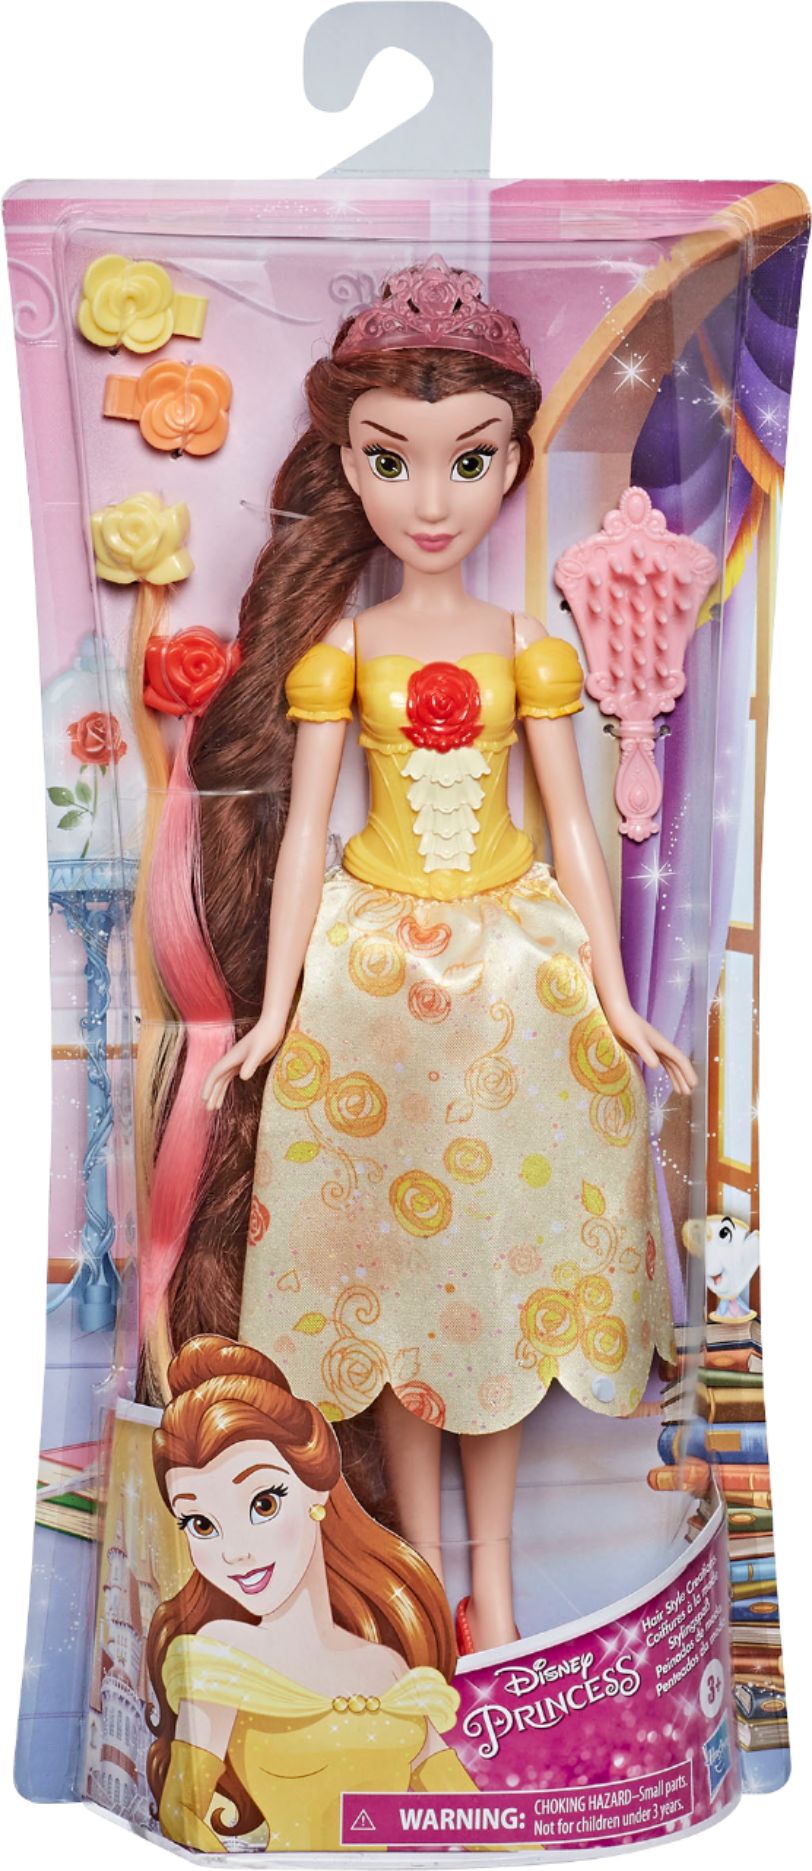 Disney Princess Hair Style Creations Rapunzel Fashion Doll - Styles May  Vary - Big Apple Buddy